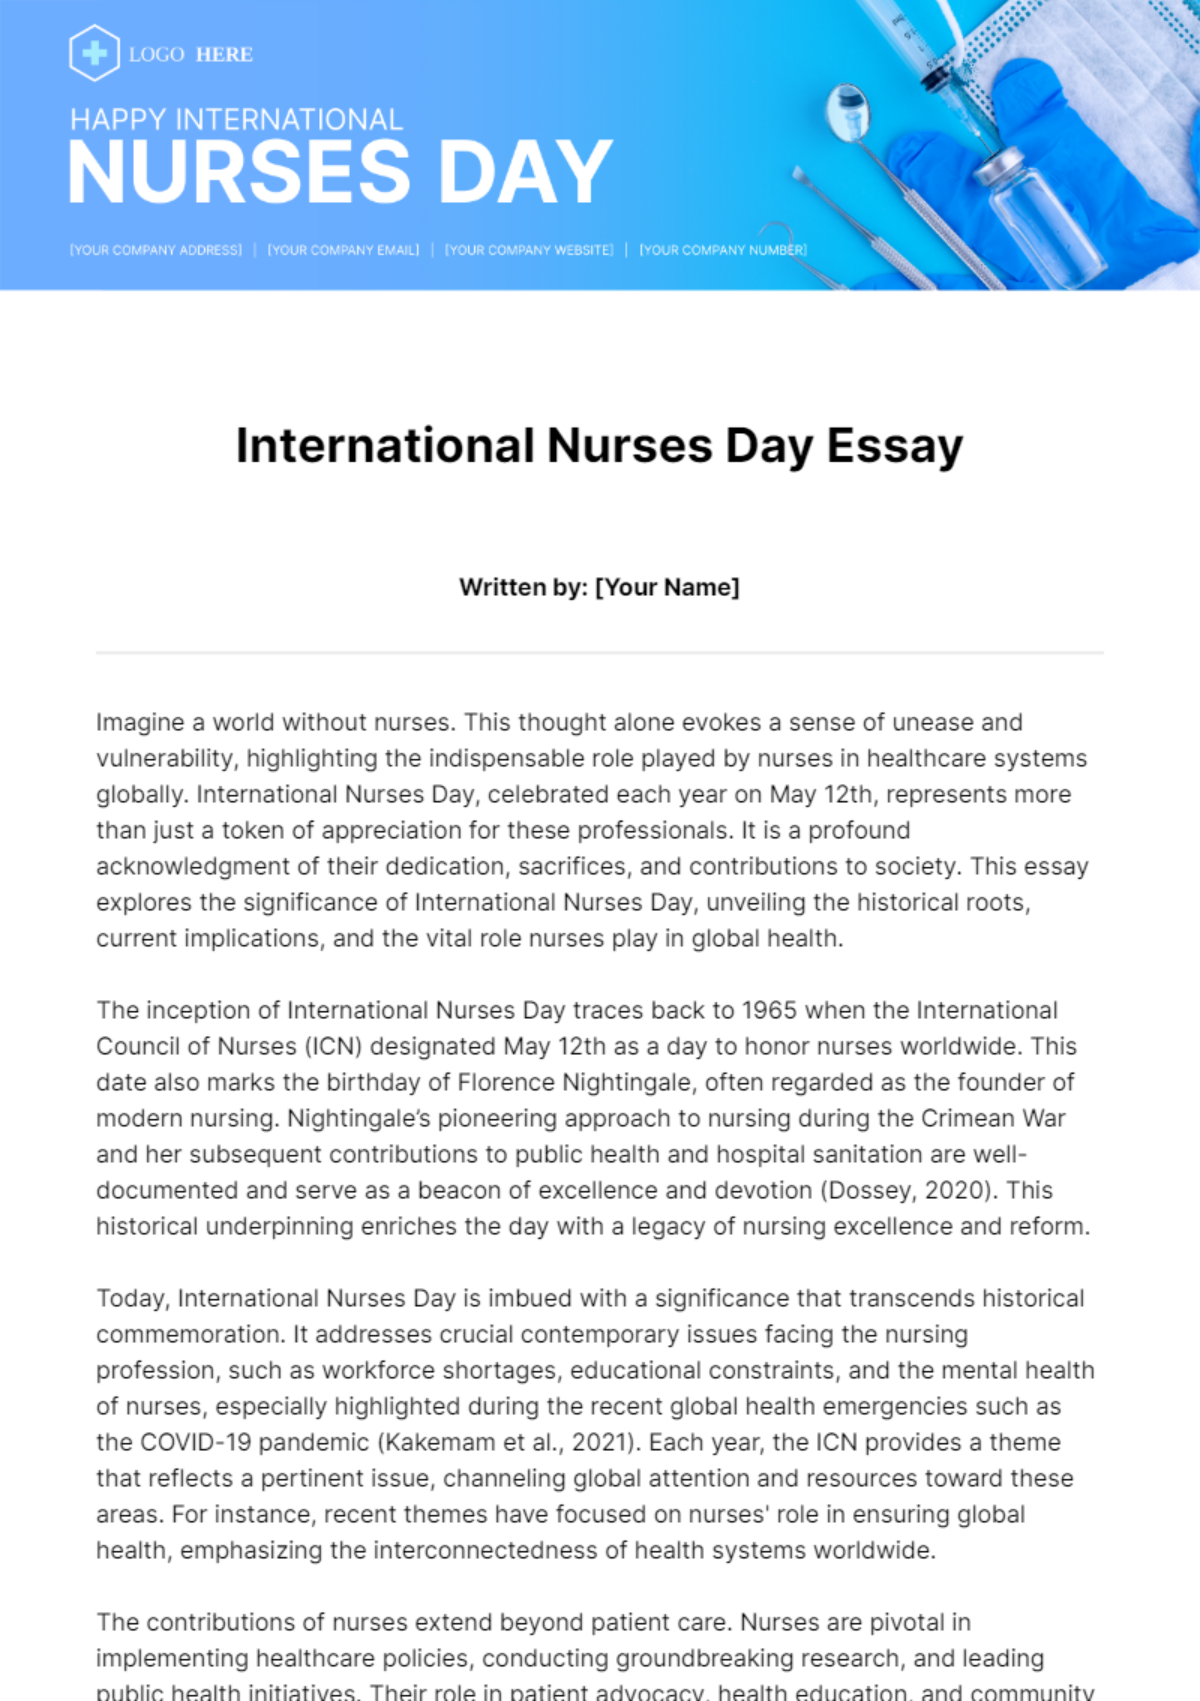 International Nurses Day Essay Template